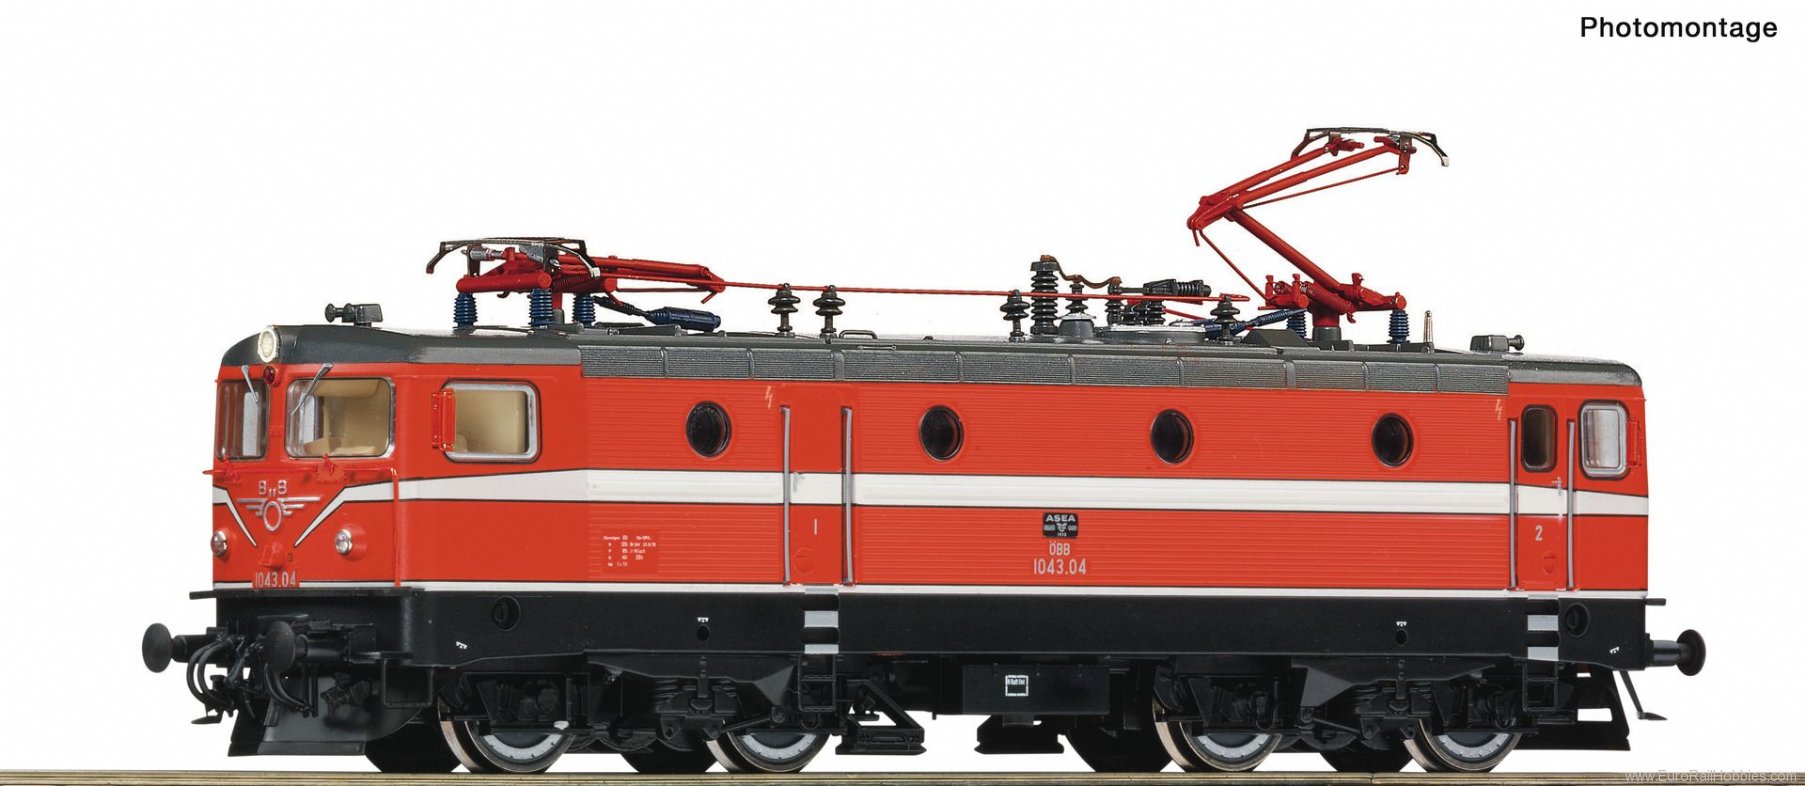 Roco 70454 ÃBB Electric locomotive 1043.04 (DCC w/Sou